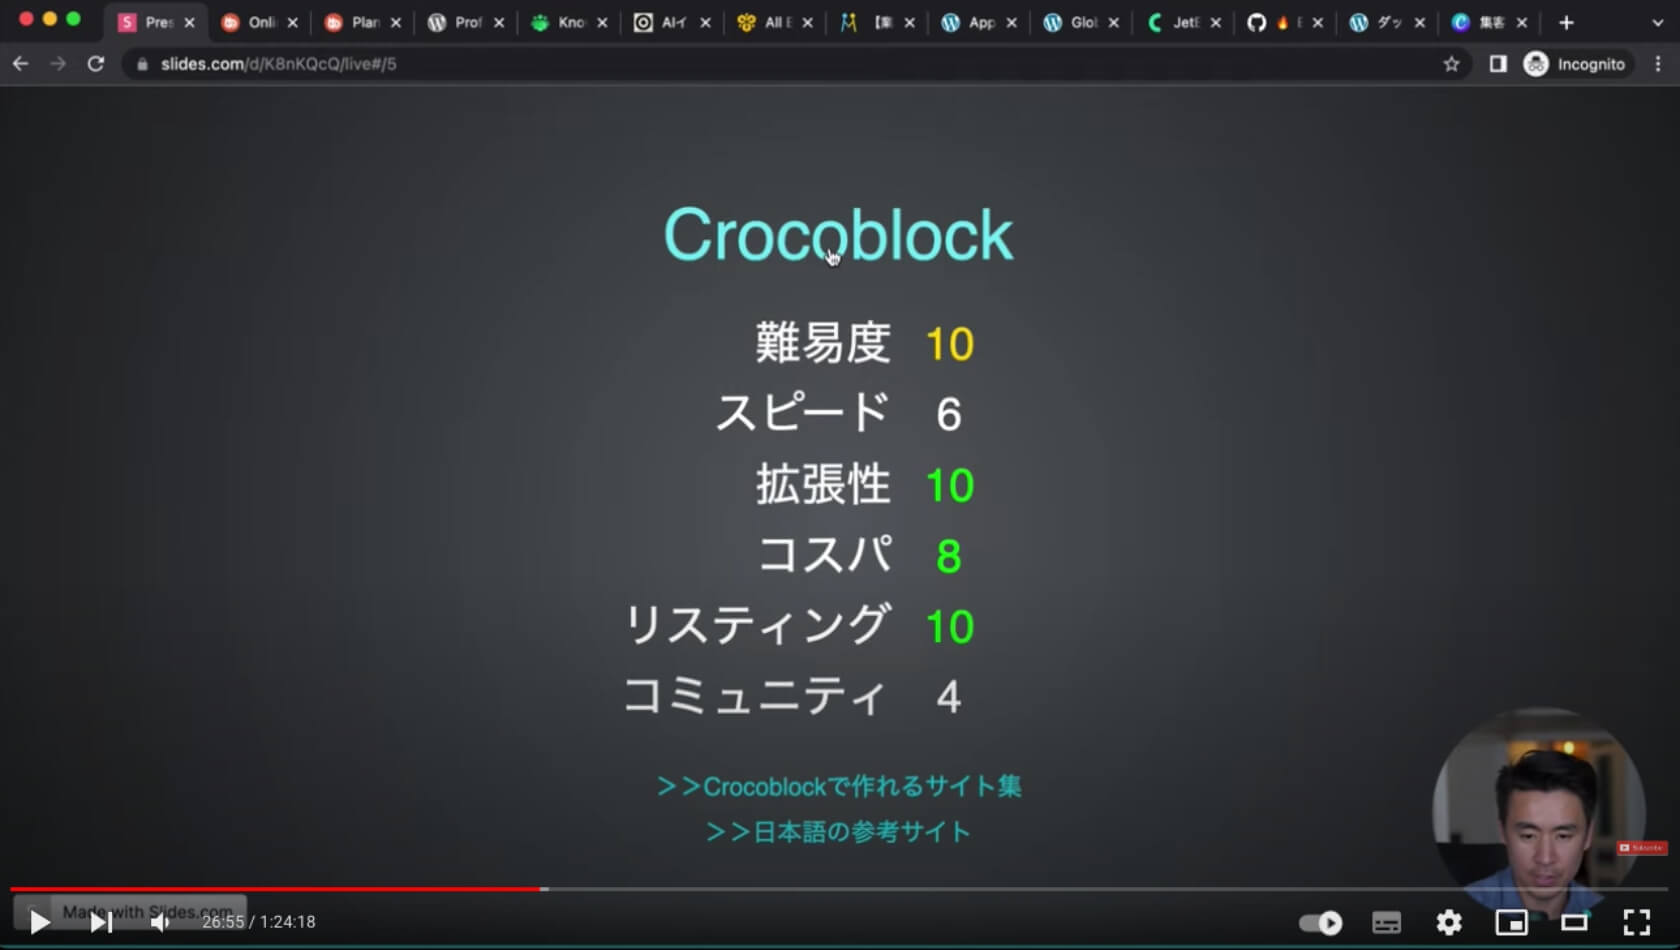 Crocoblockの難易度やコスパなどについて解説